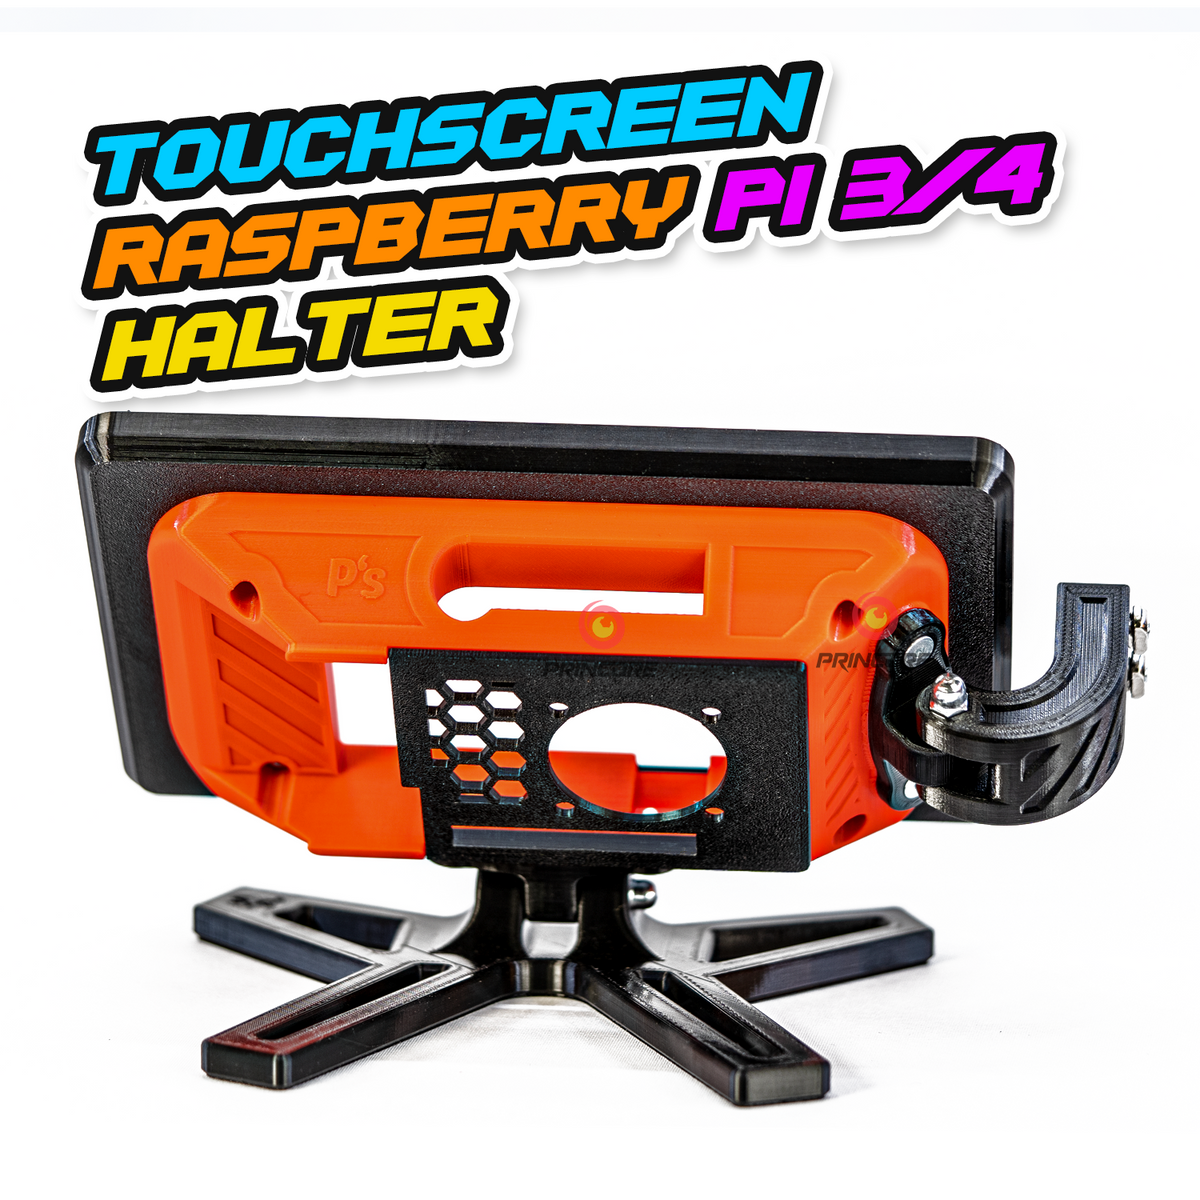 Touchscreen Raspberry Pi 3 / 4 Halter